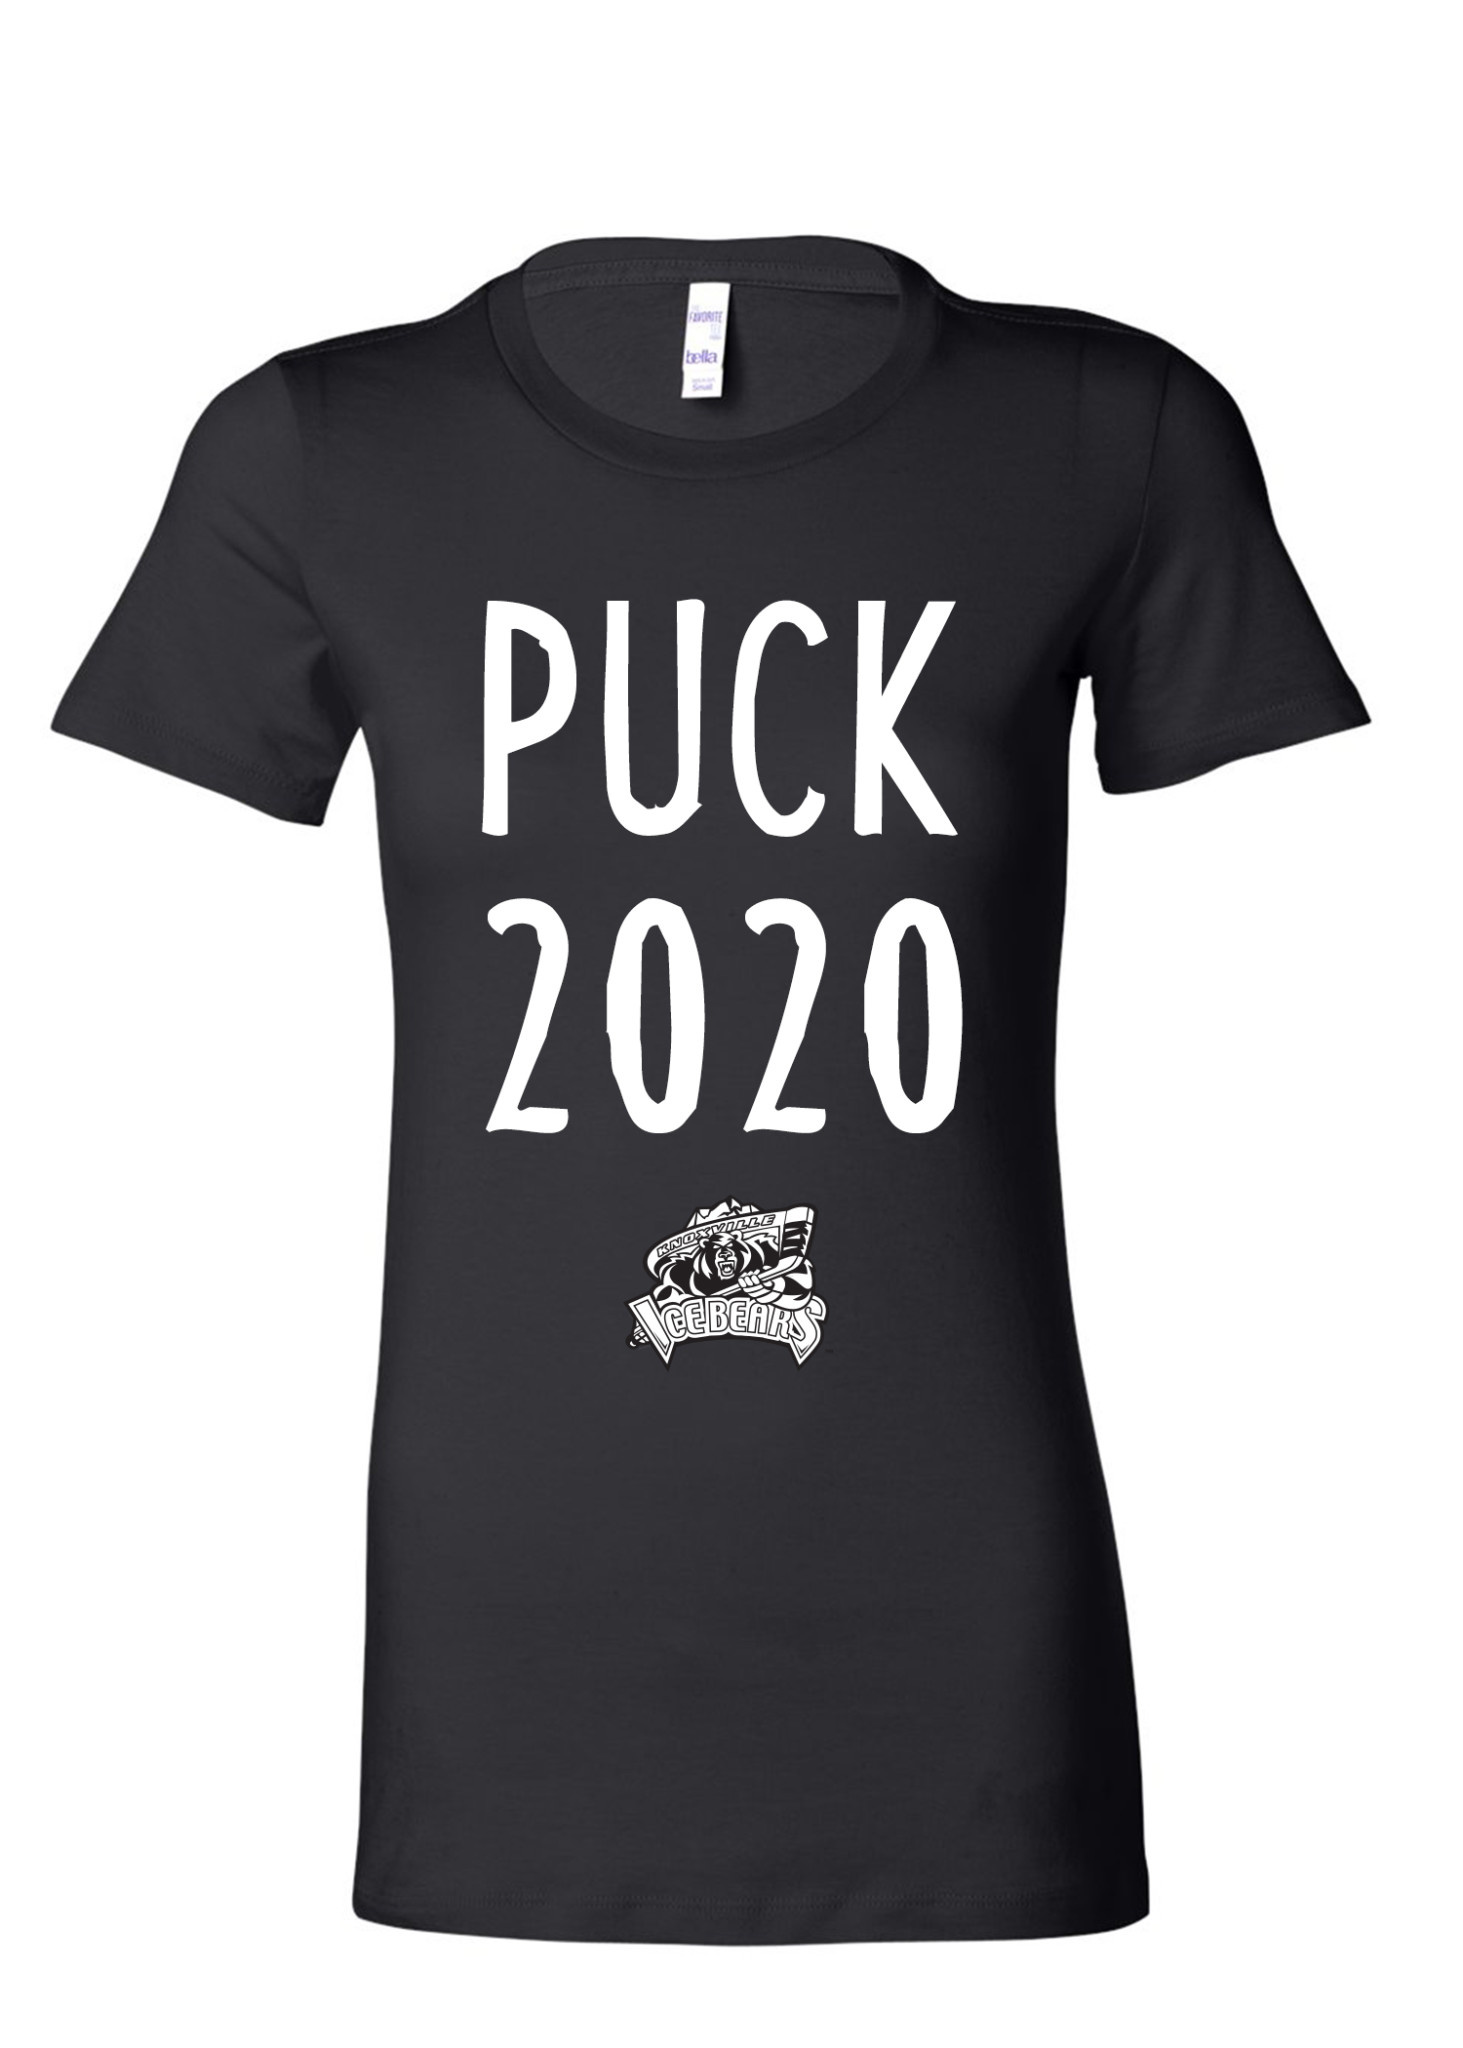 Bella Puck 2020 Women's